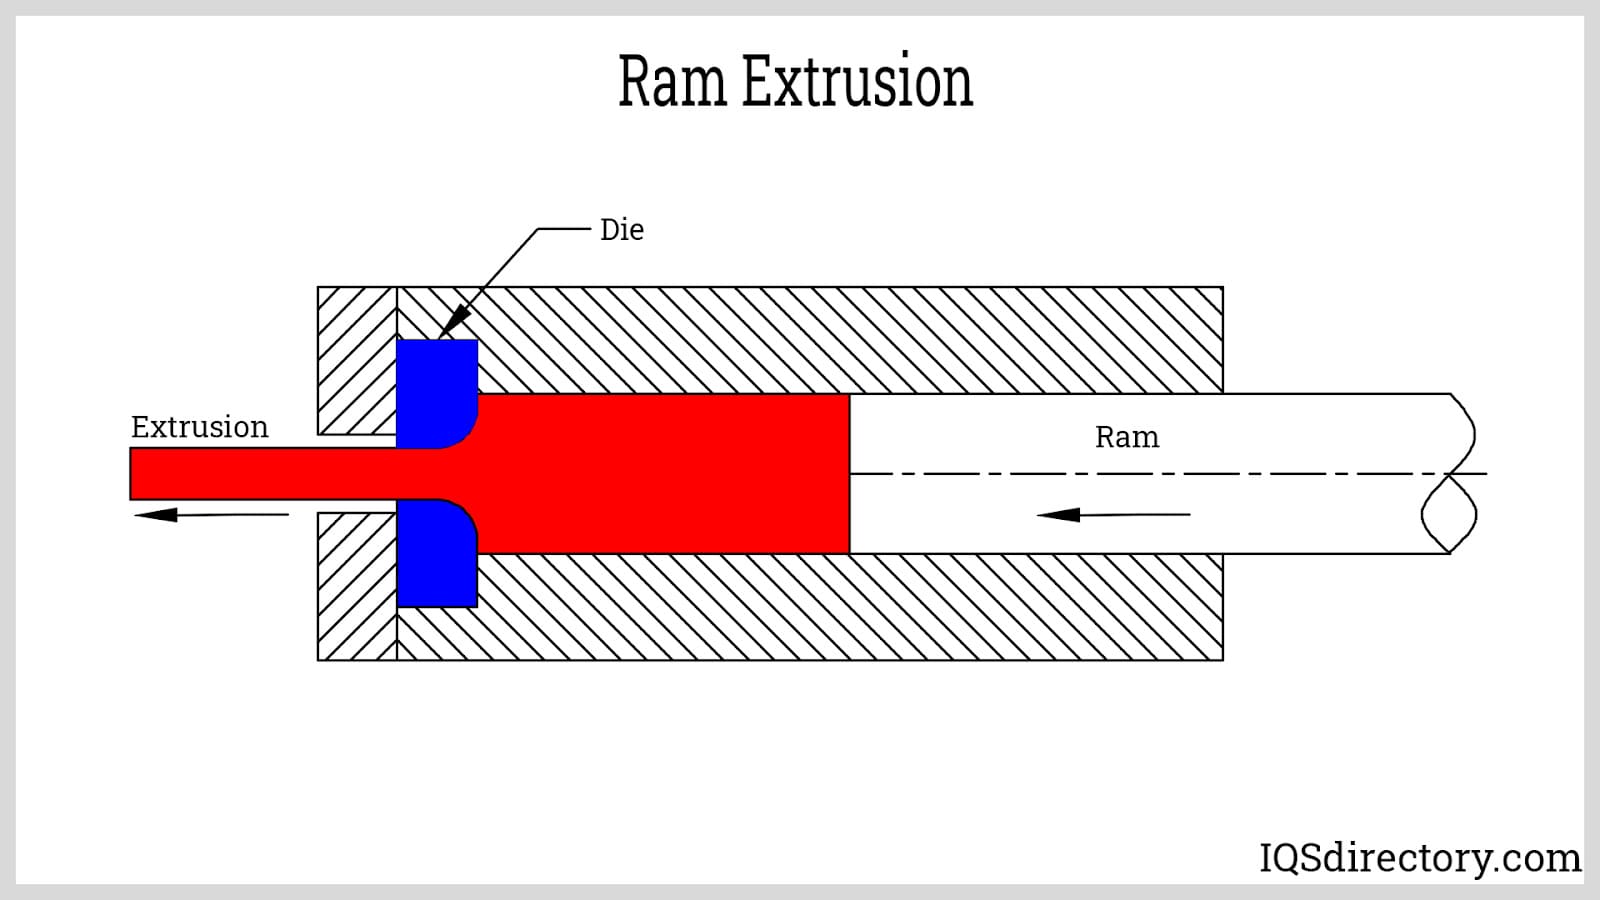 Ram Extrusion